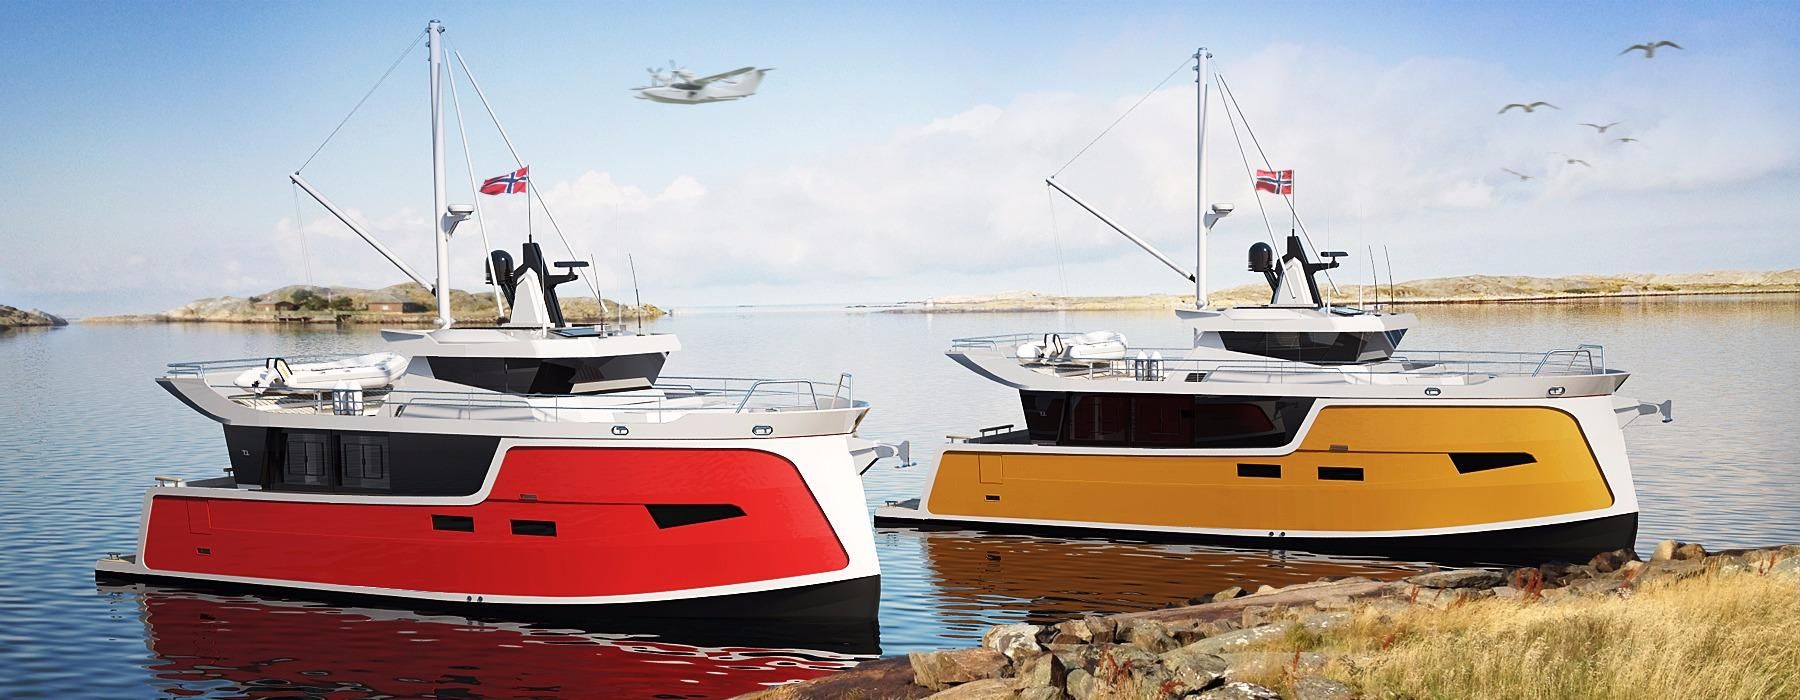 2018 Trondheim Trawler Motor Yacht for sale - YachtWorld